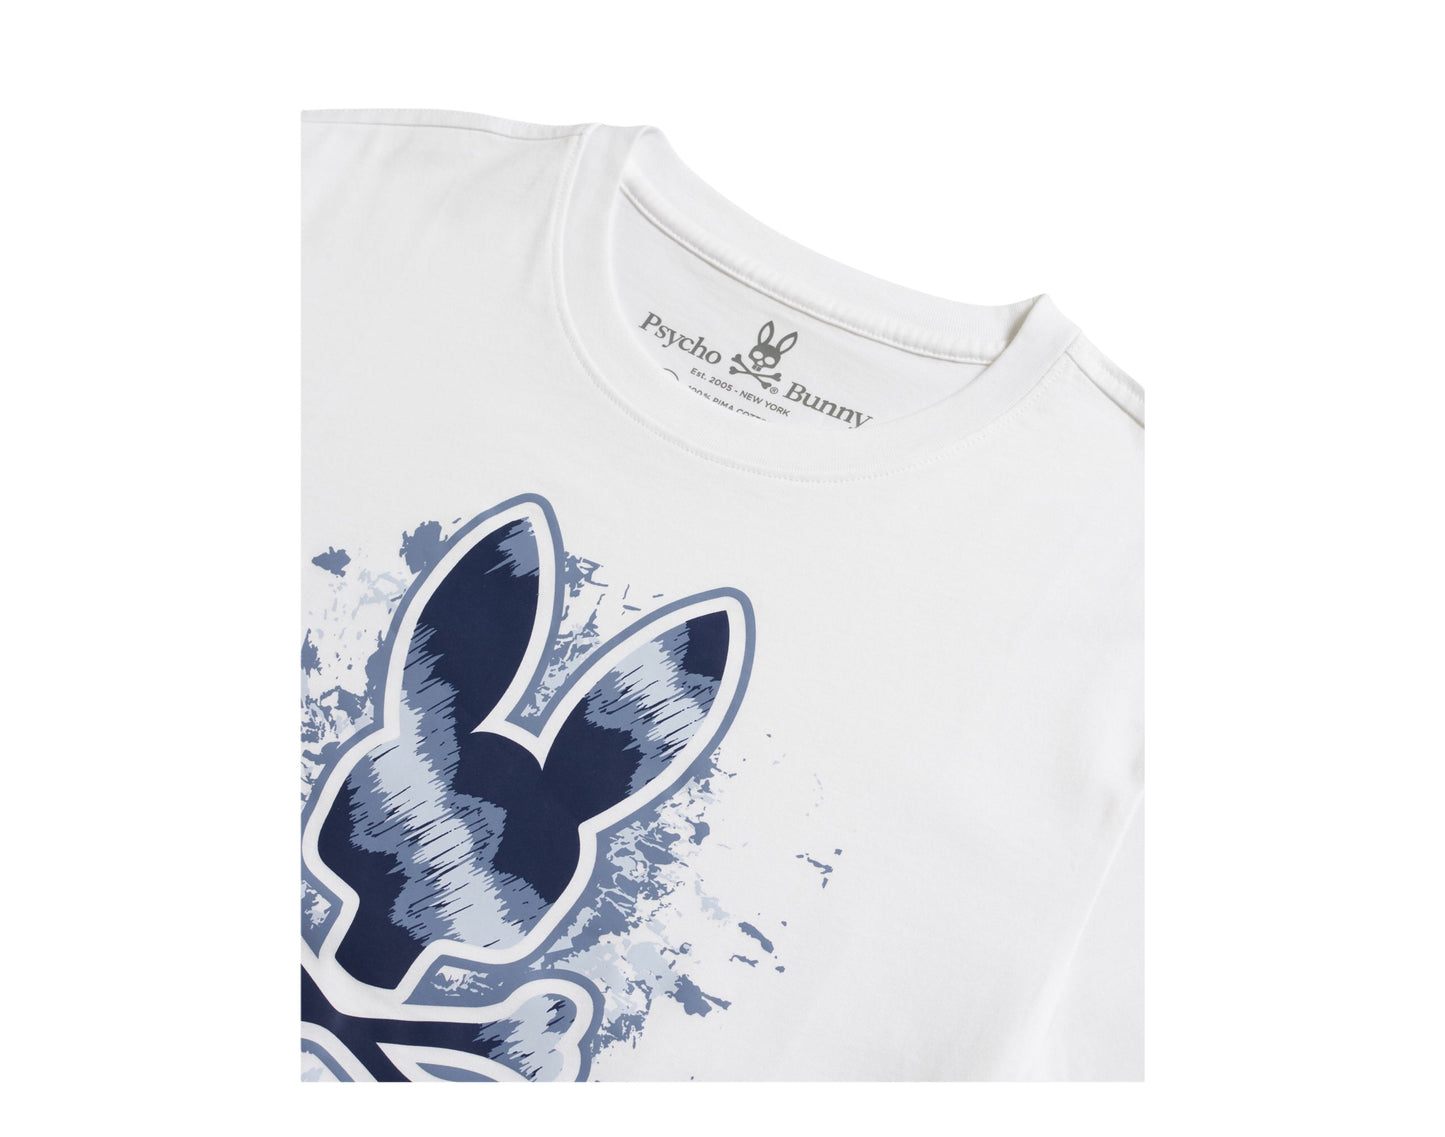 Psycho Bunny Drayton Graphic Kids' Tee Shirt